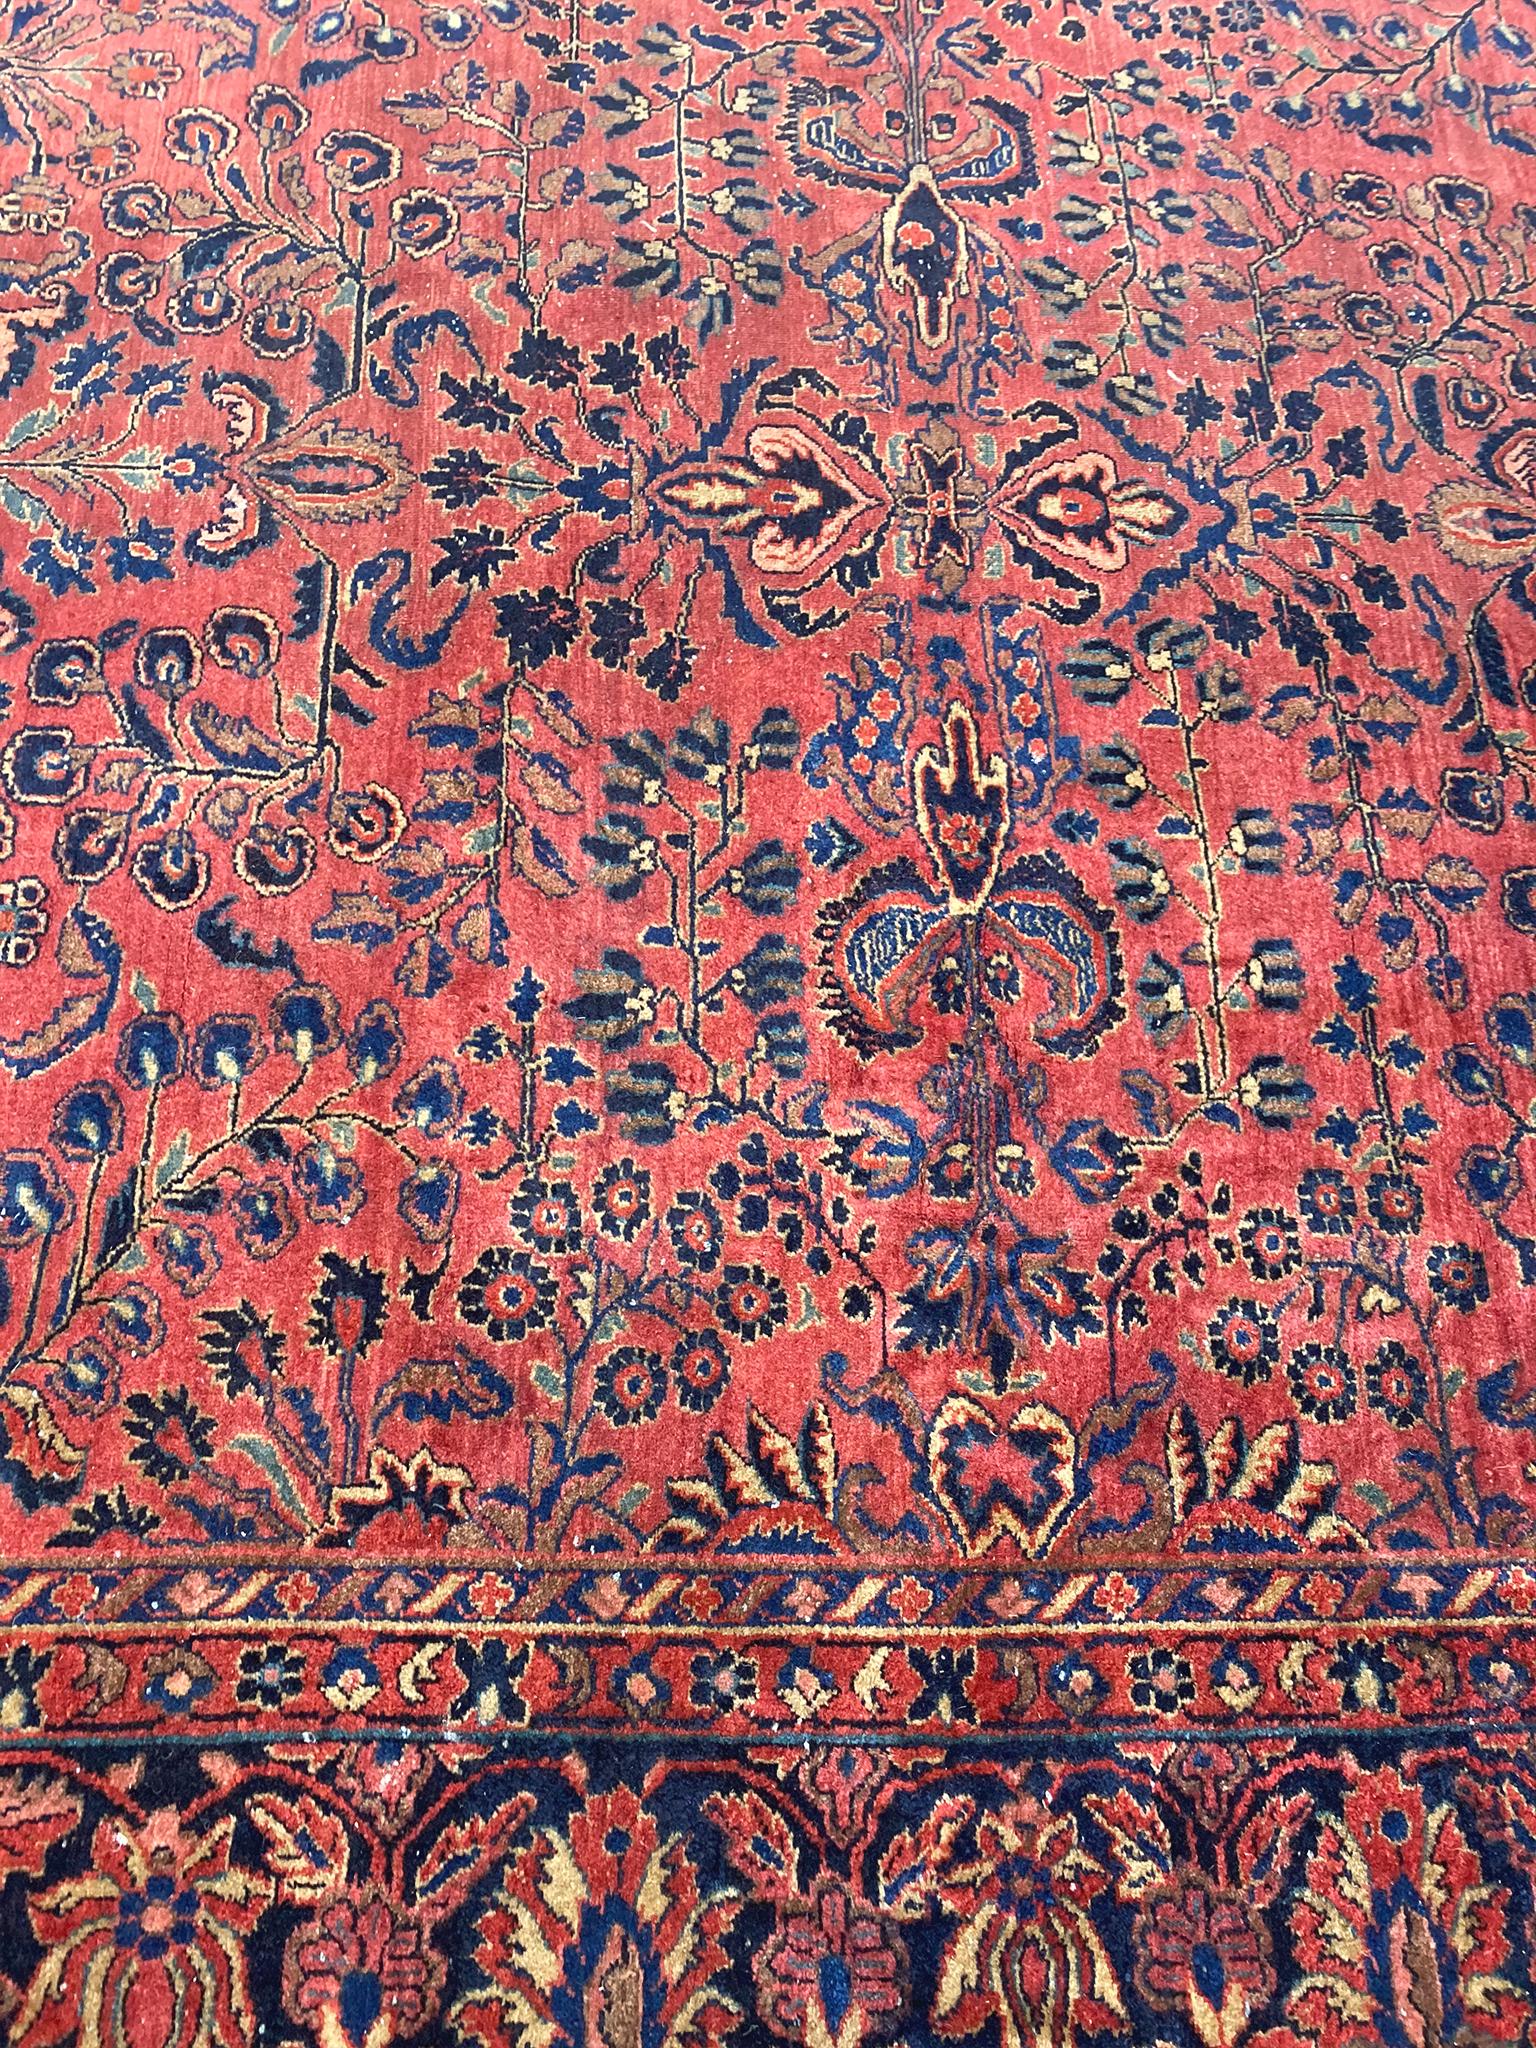 Dyed Mid-20th Century Sarouk Rug